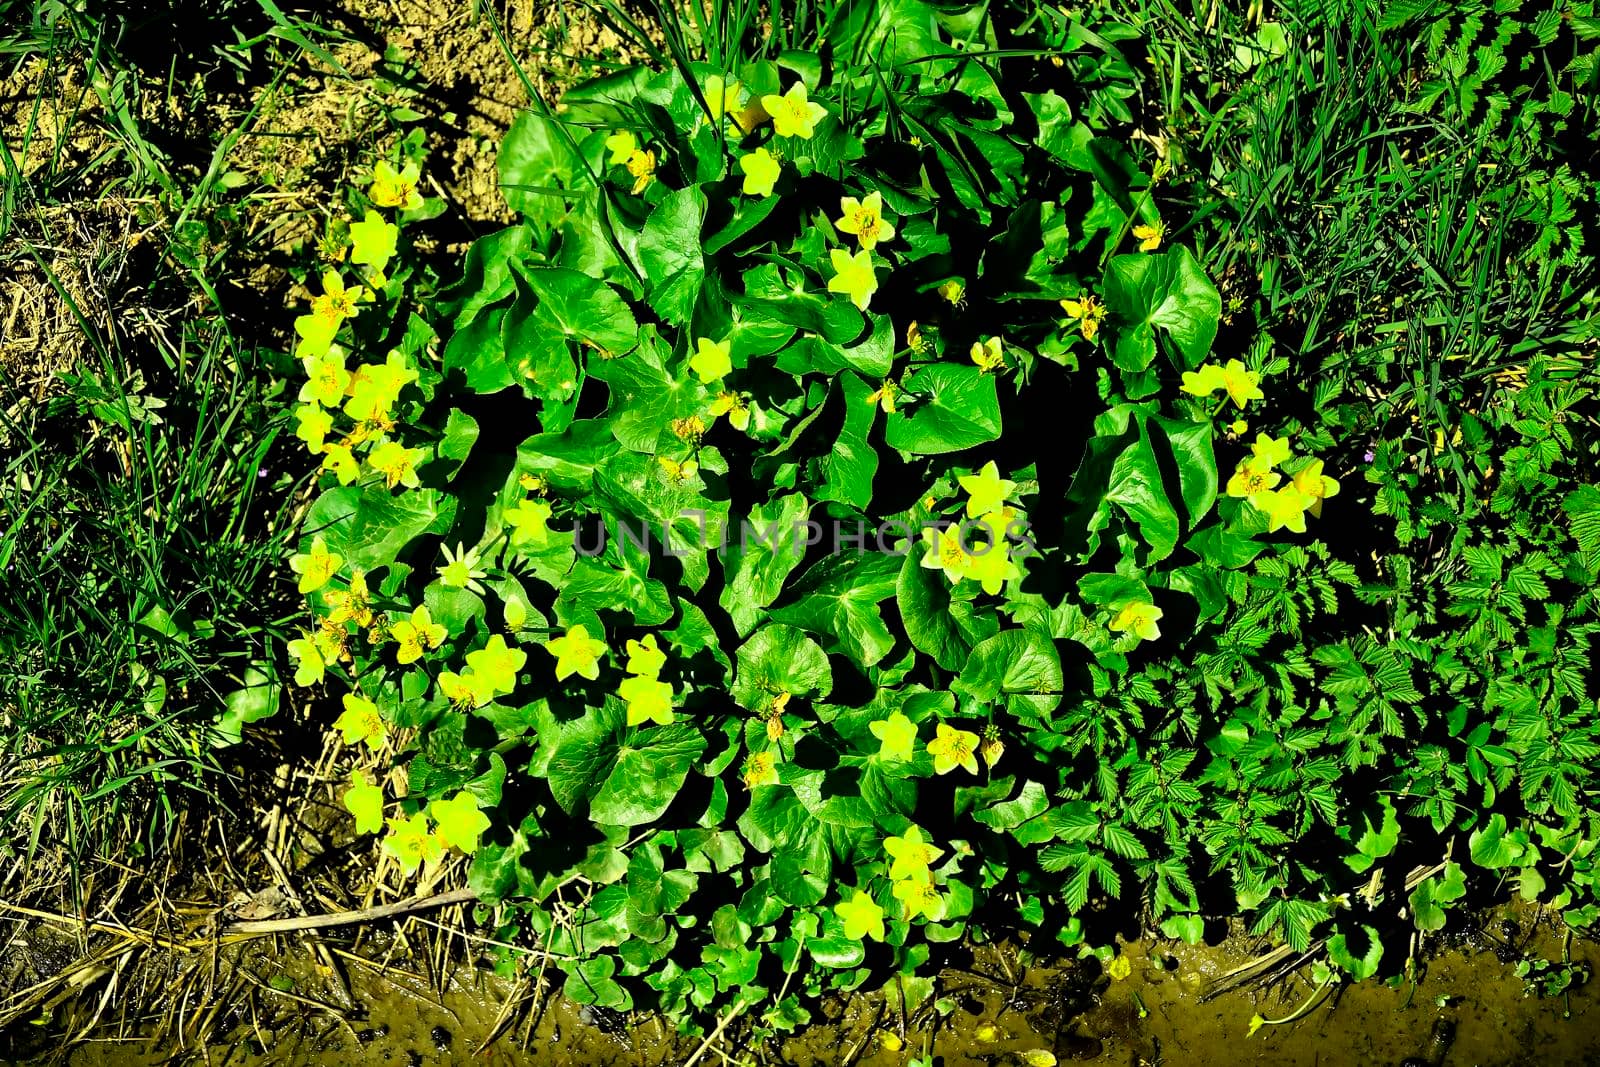 marsh-marigold, spring flower in Germany by Jochen